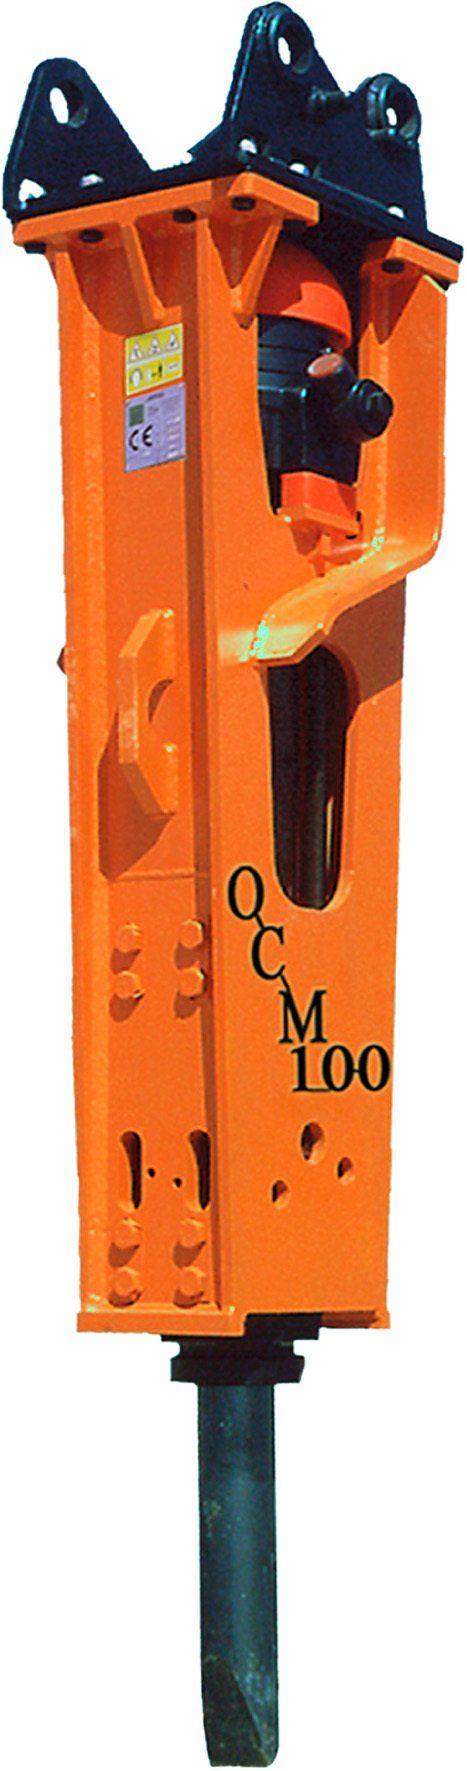 disegno tecnico OCM 100ps